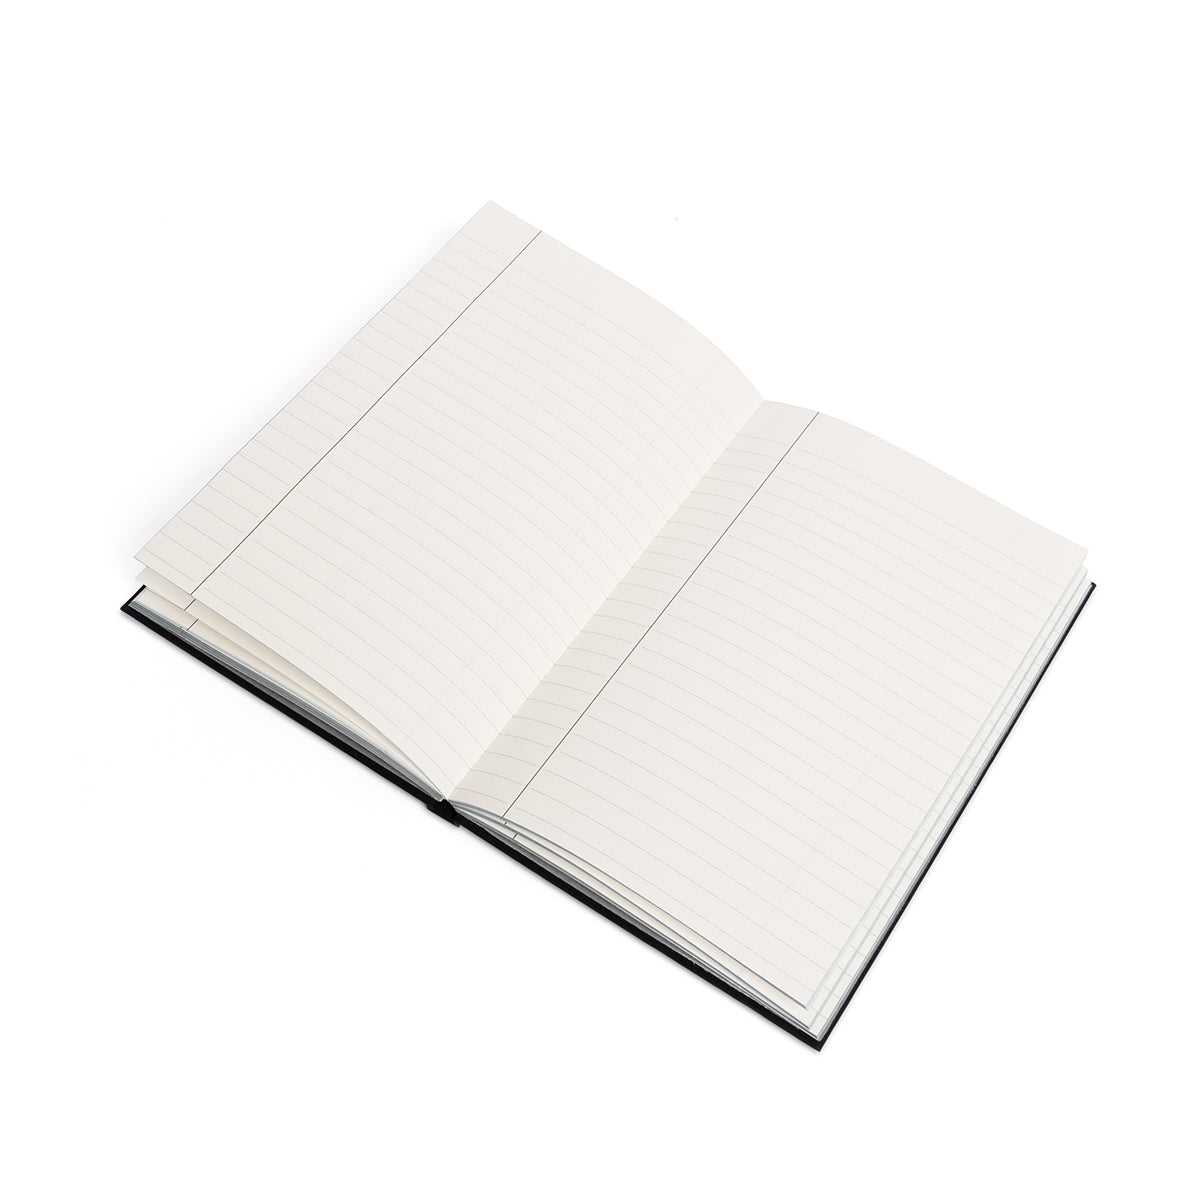 Simple Ruled Notebook - Alaska Mountain Layers